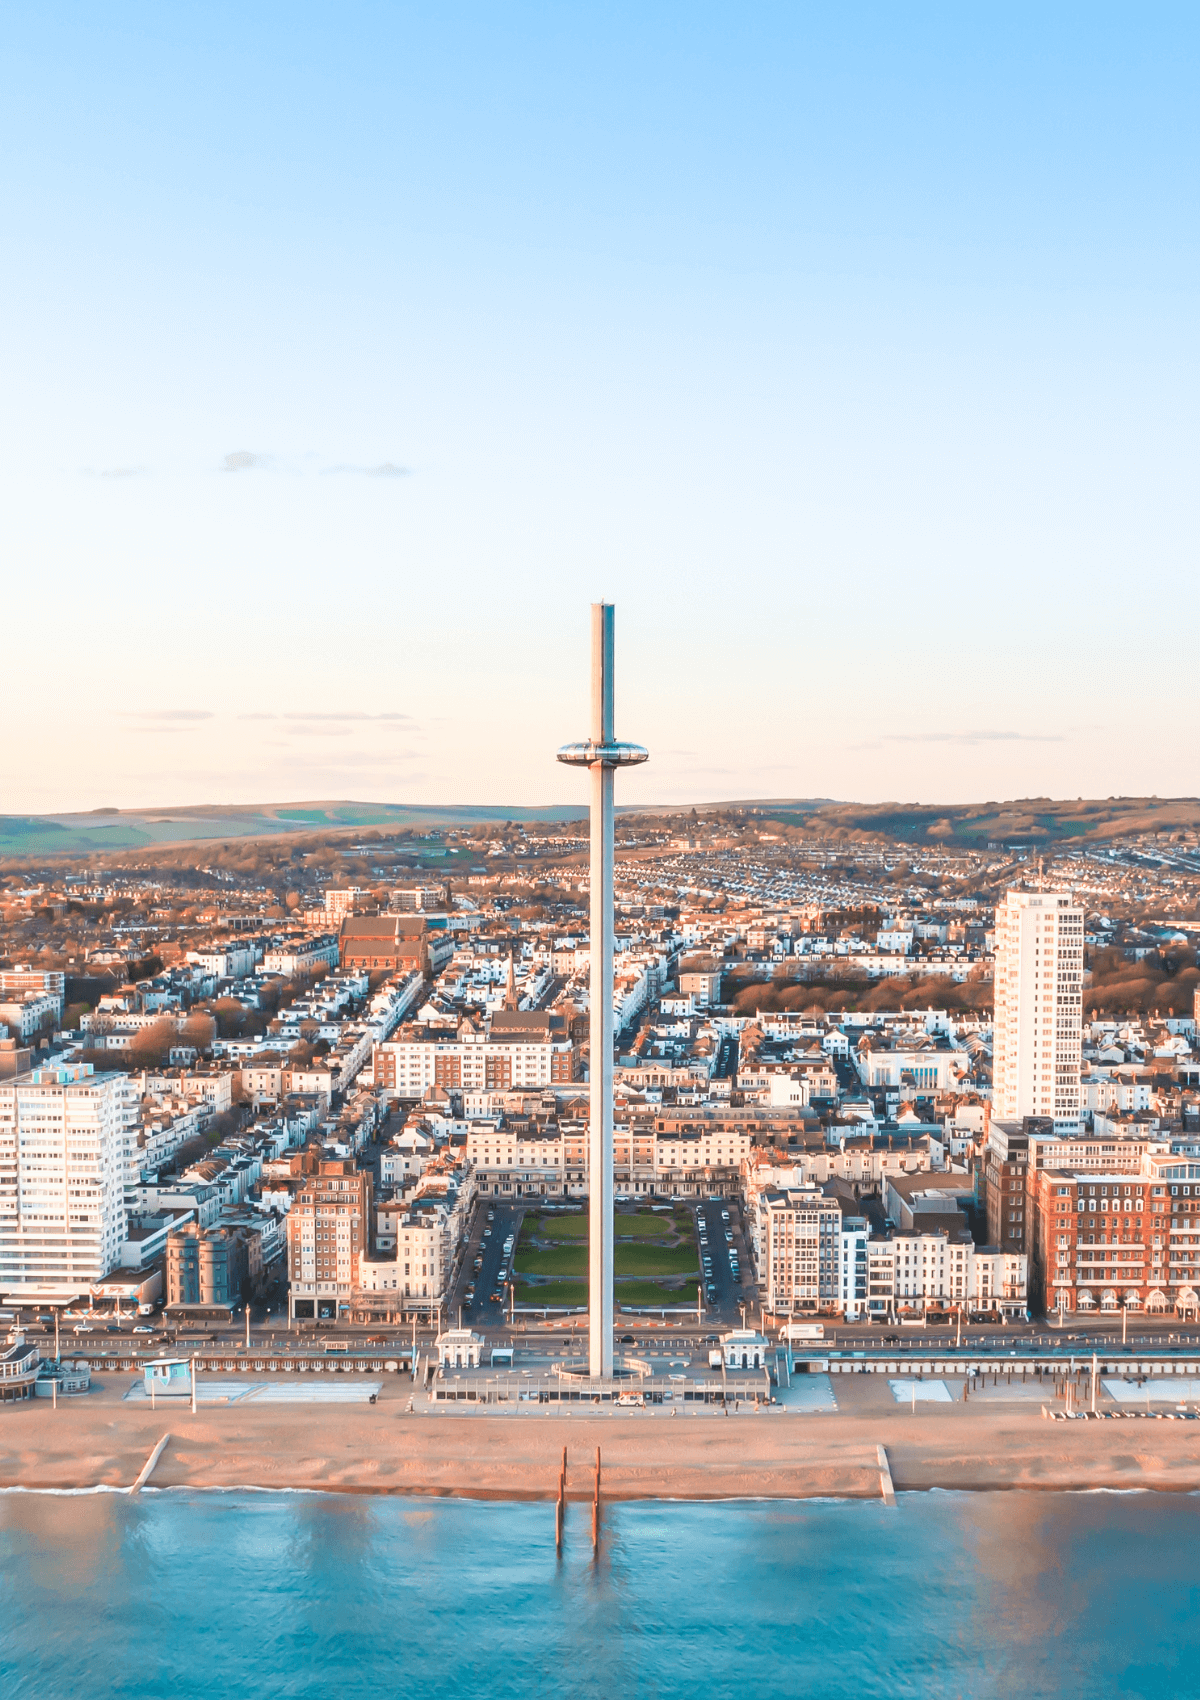 Brighton i360 tower, England